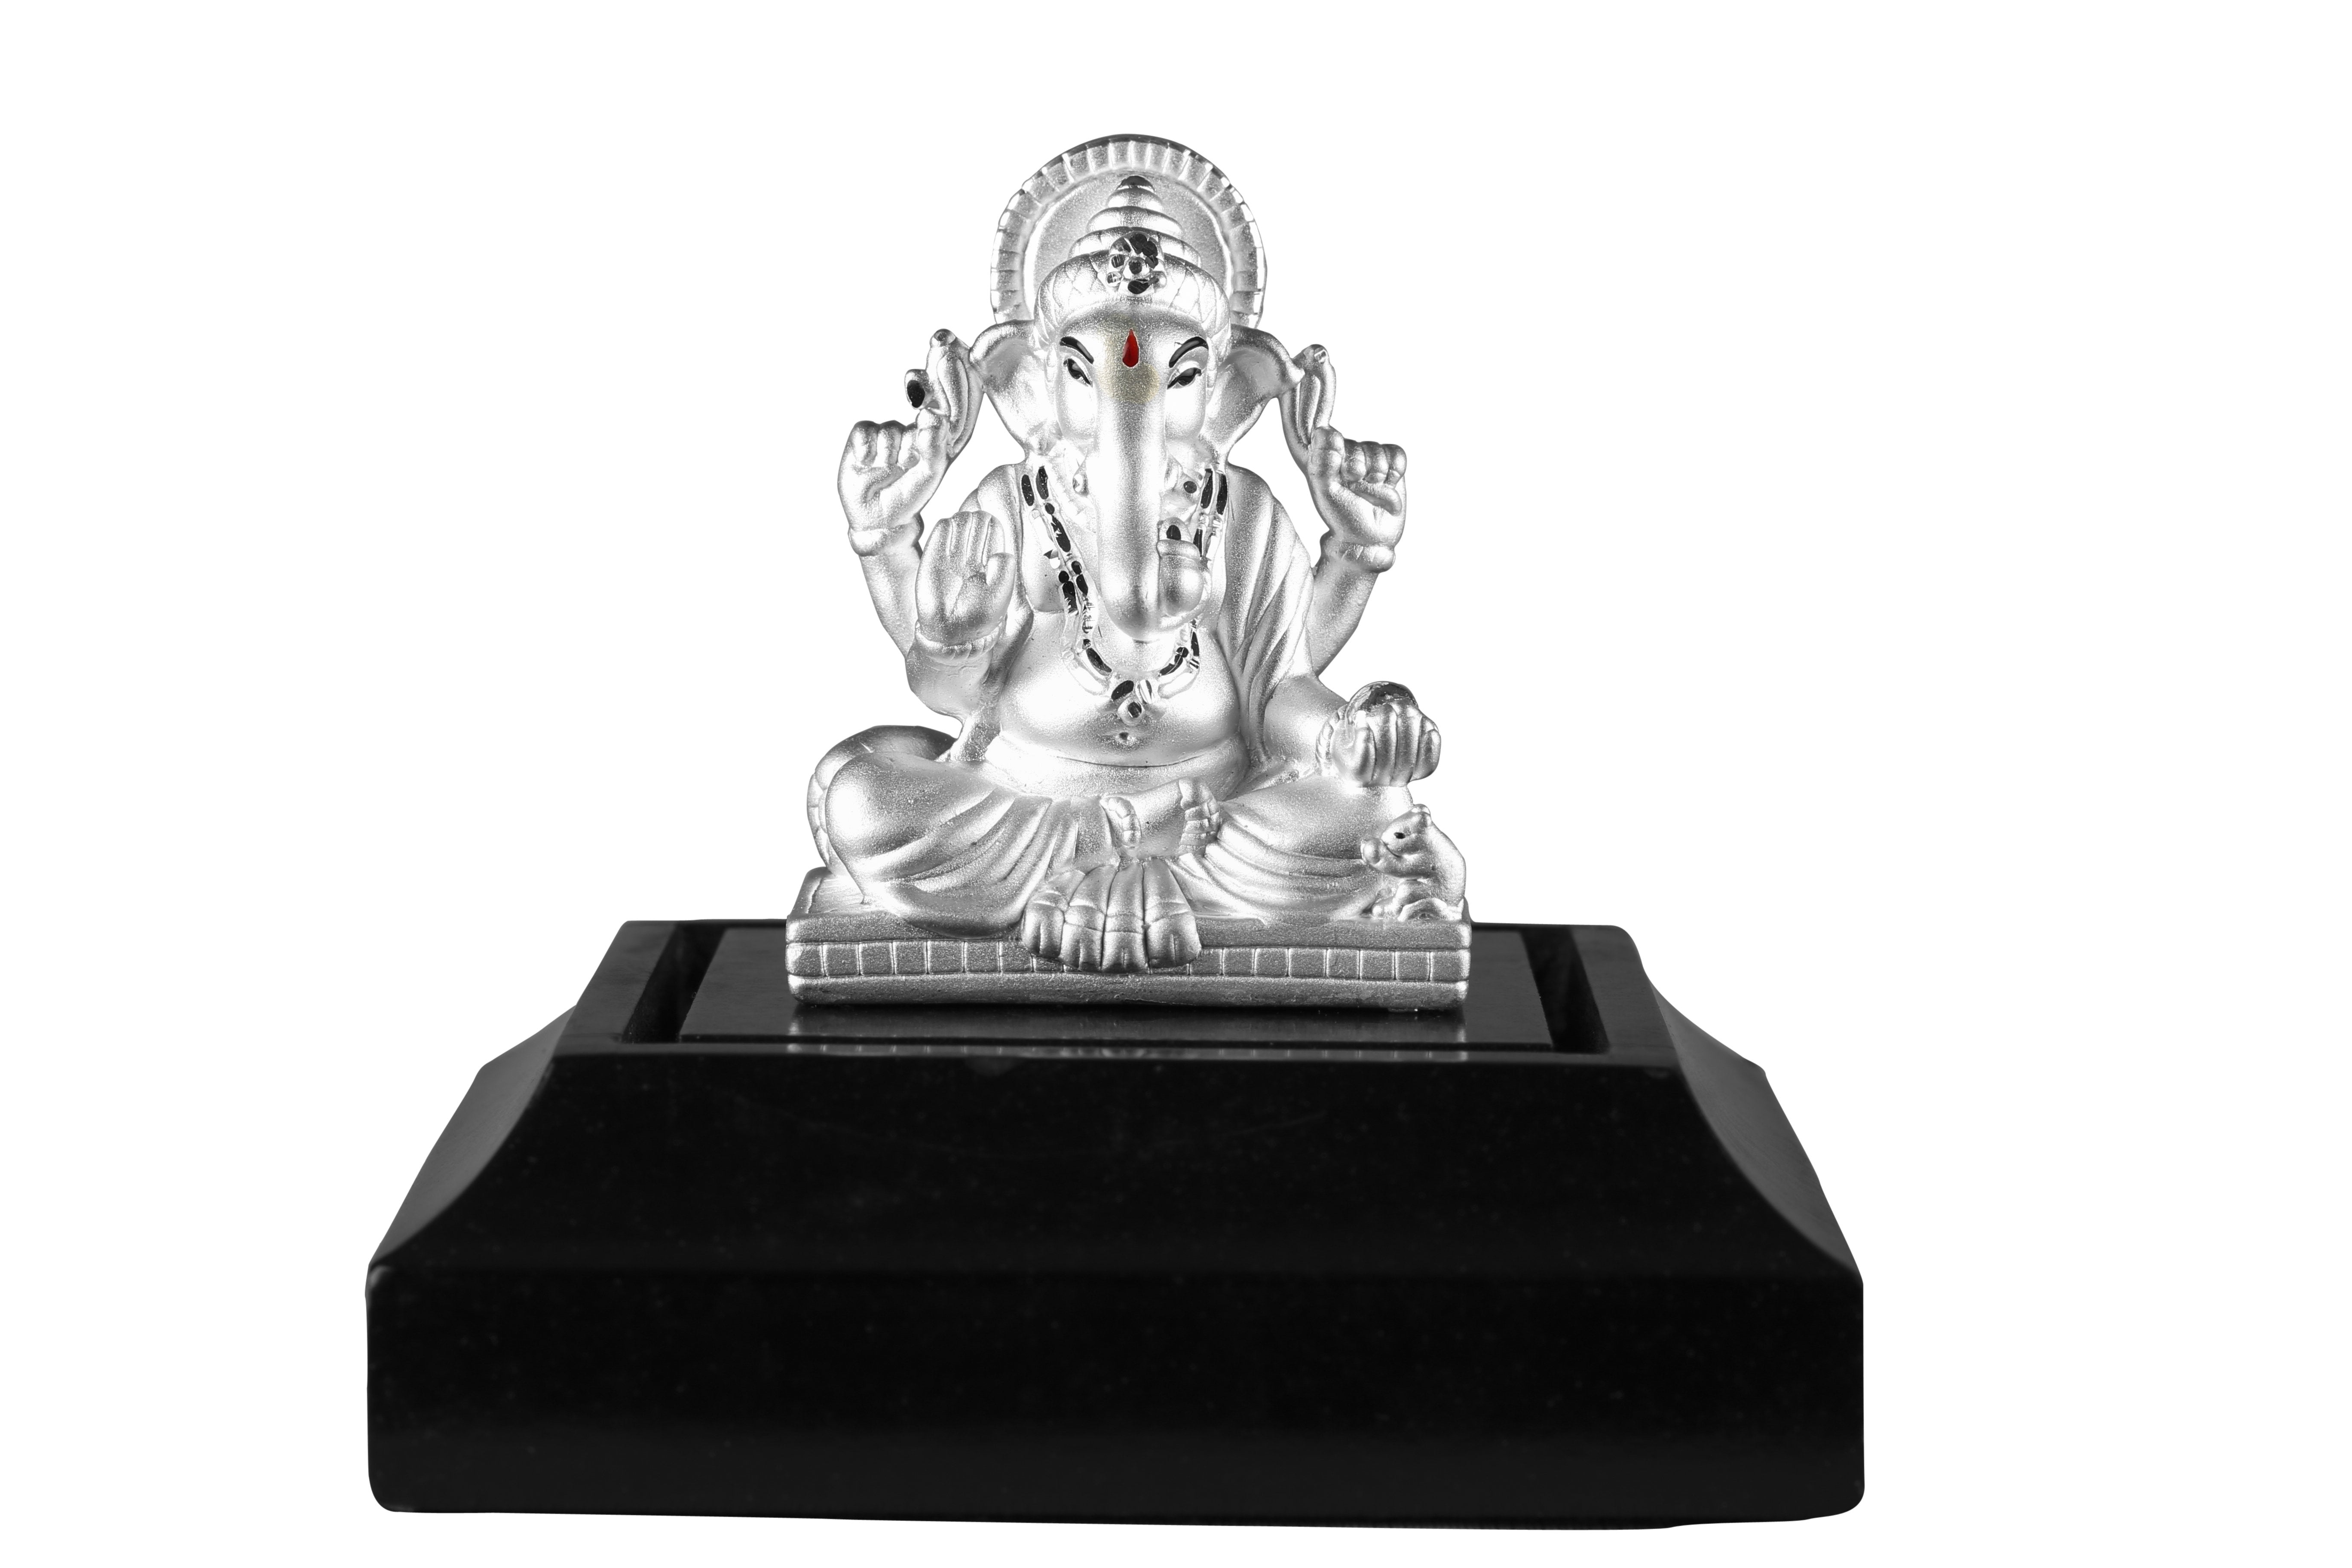 999 Pure Silver Ganesha Idol By Krysaliis Isvara - Krign_Ms13 Idols